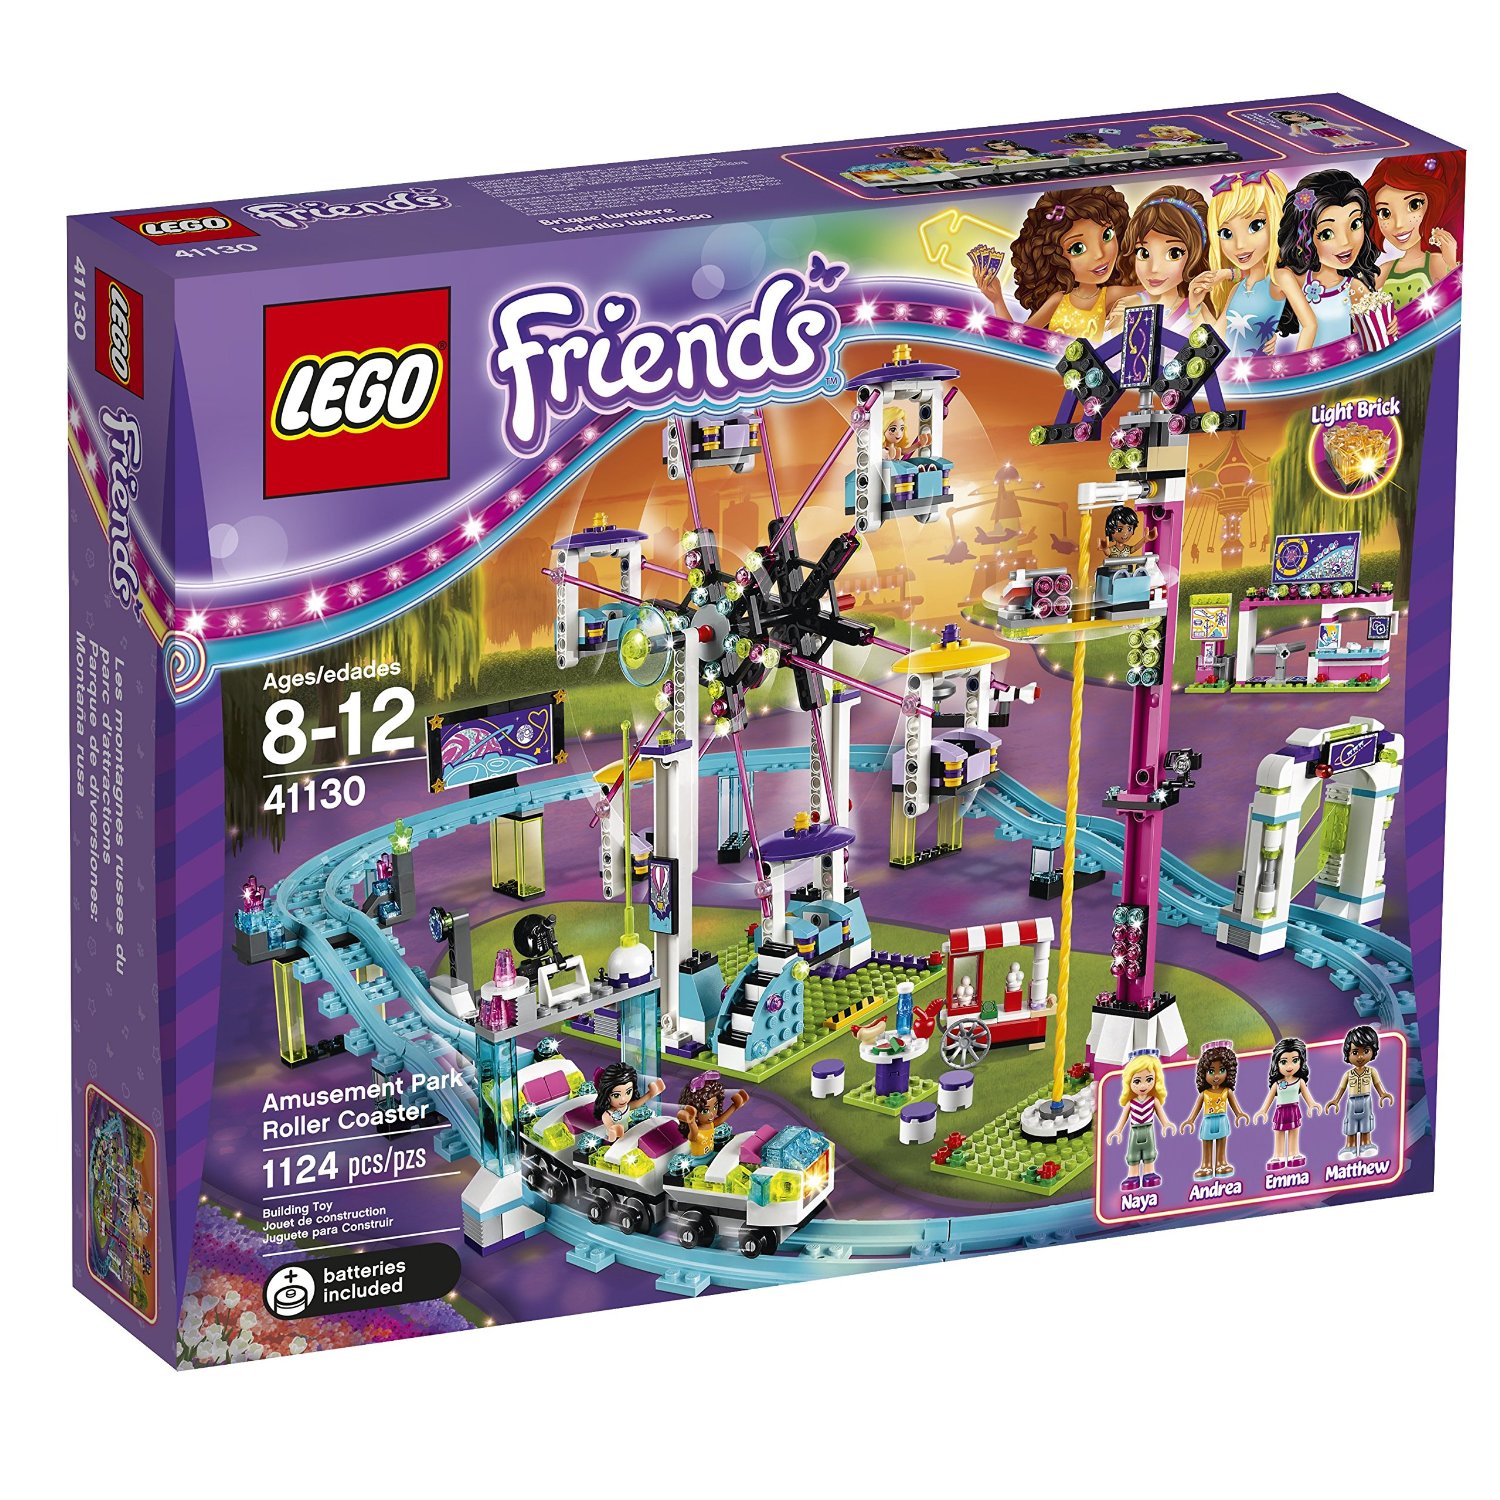 LEGO Friends 41130 Amusement Park Roller Coaster – Just $79.99!